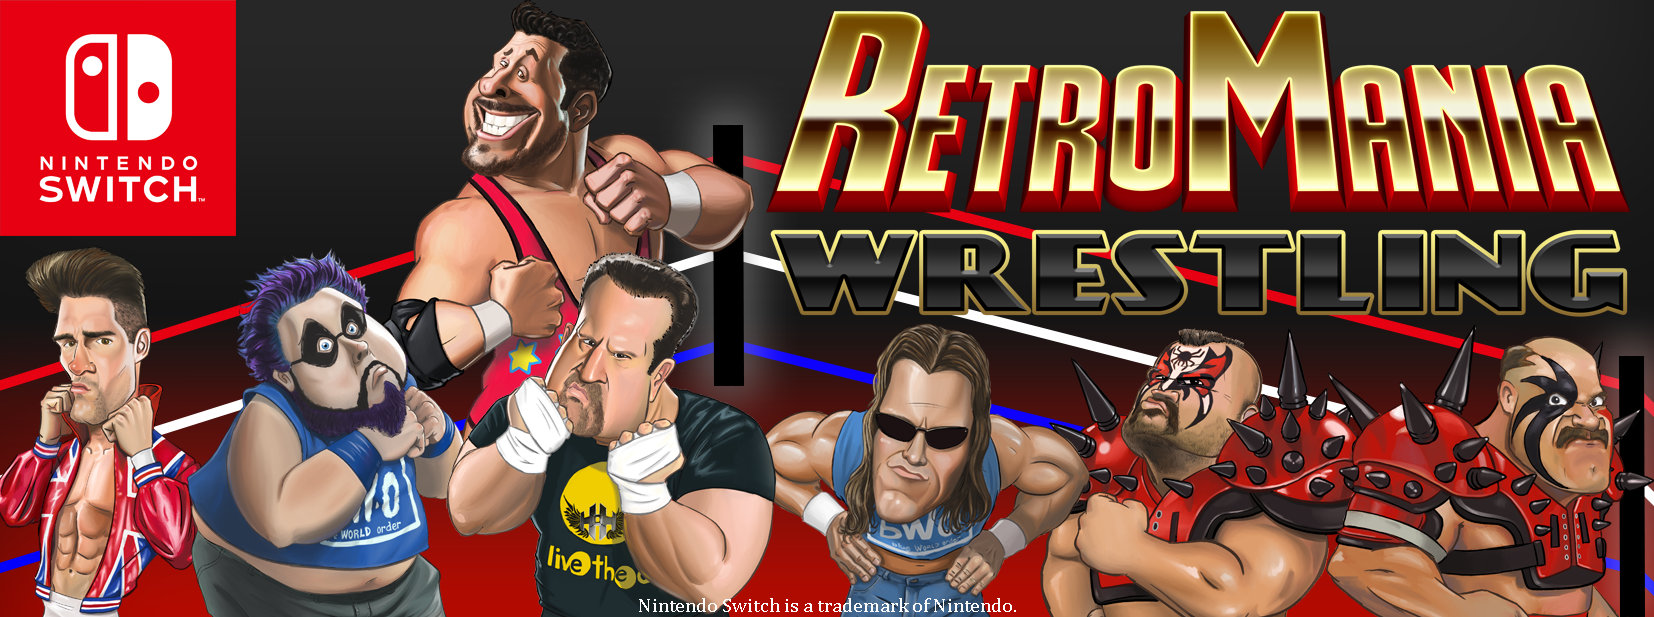 RetroMania Wrestling Bringing Back Classic Arcade Wrestling for Modern Consoles